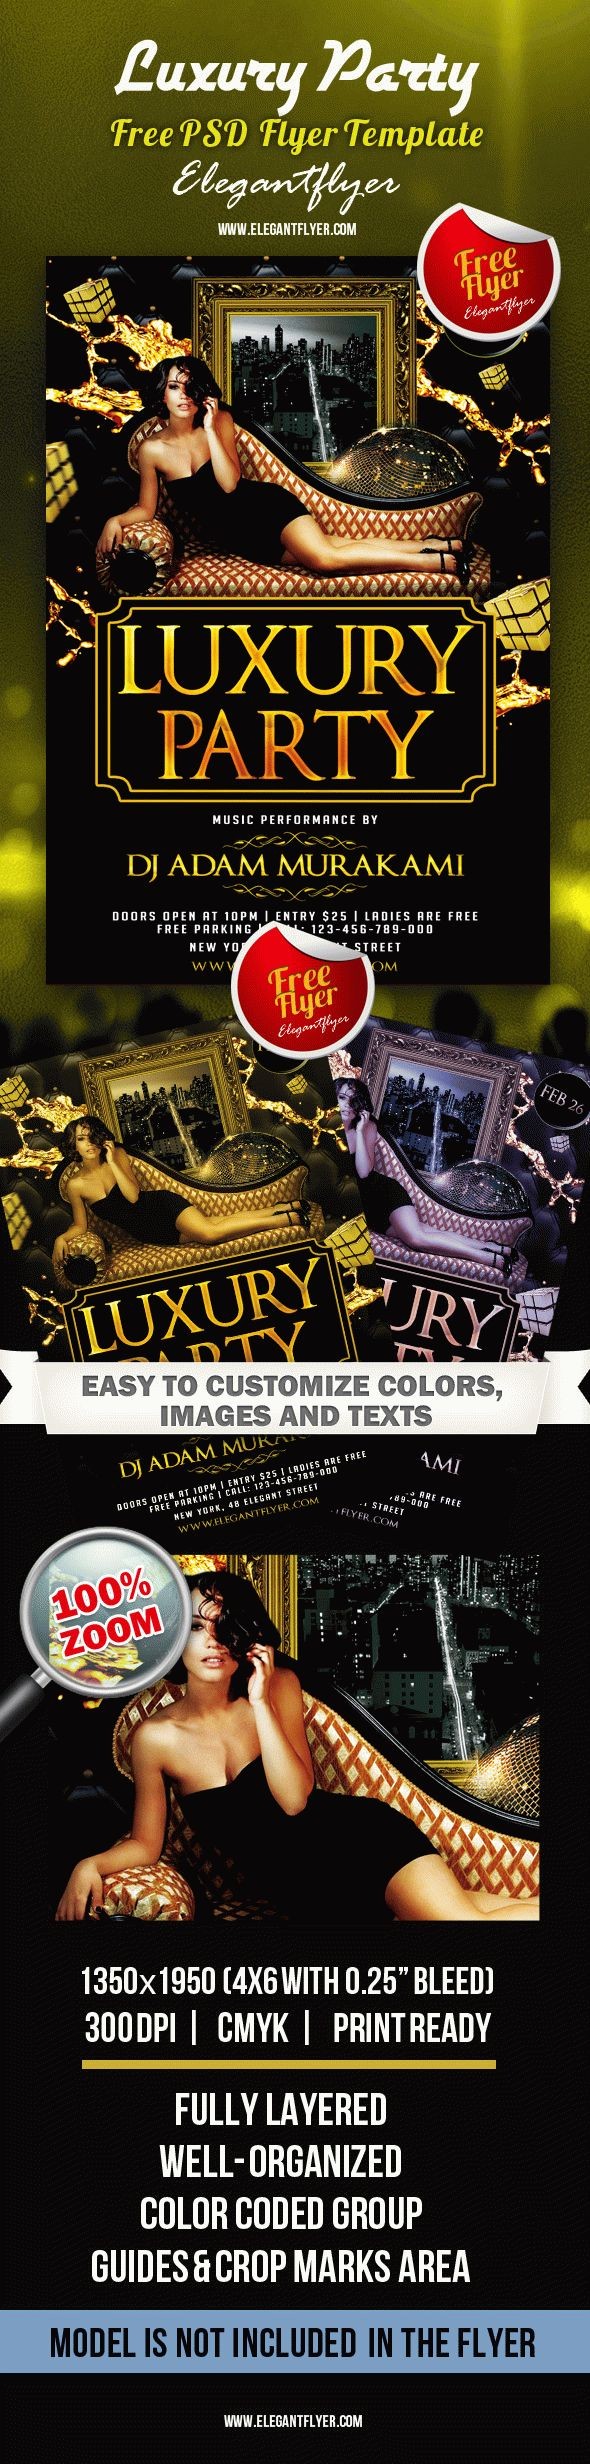 Luxury Party by ElegantFlyer